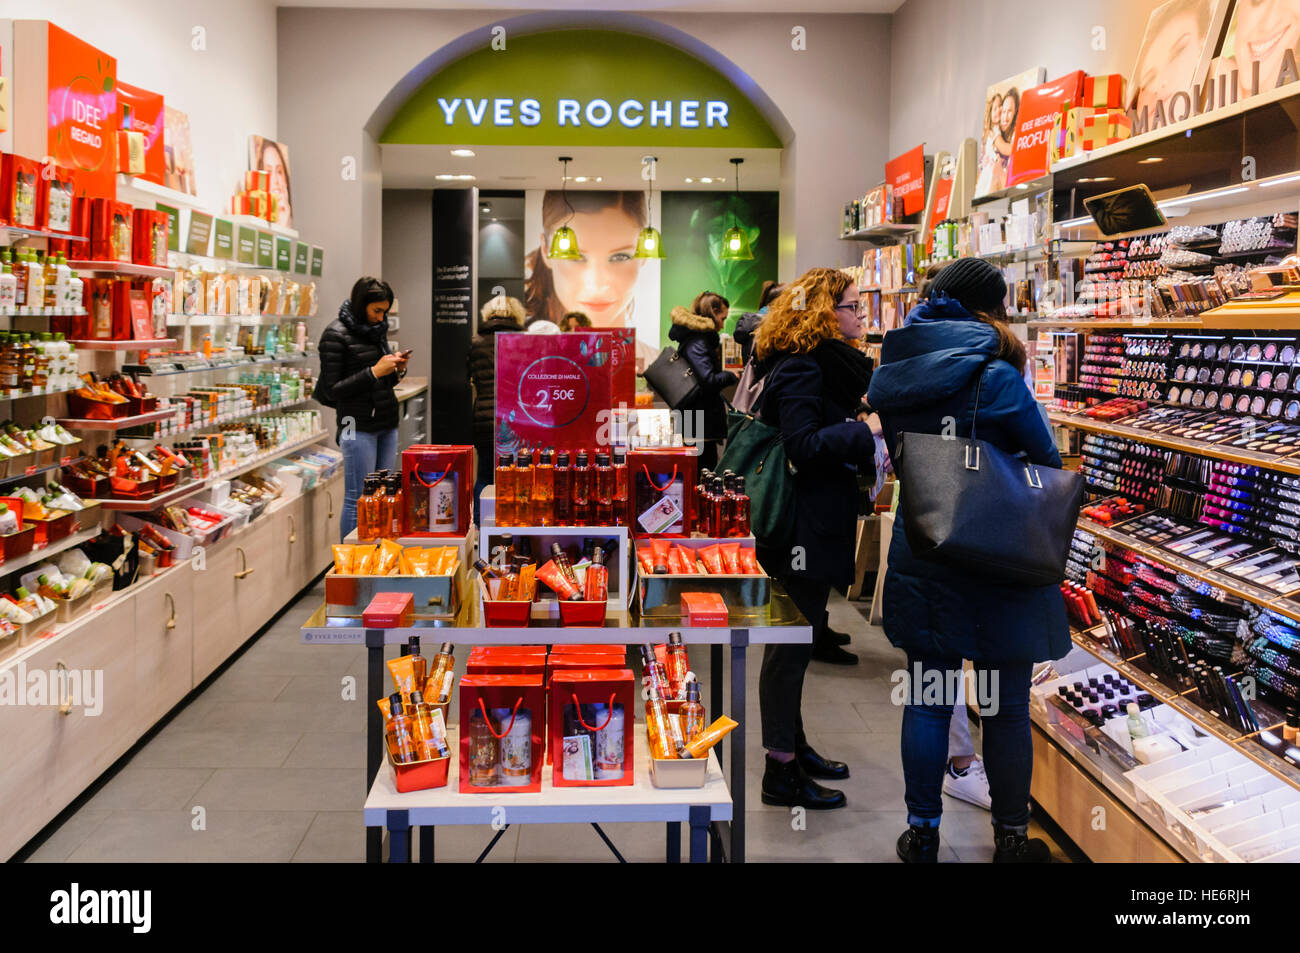 Yves Rocher cosmetics shop, Milan, Italy Stock Photo